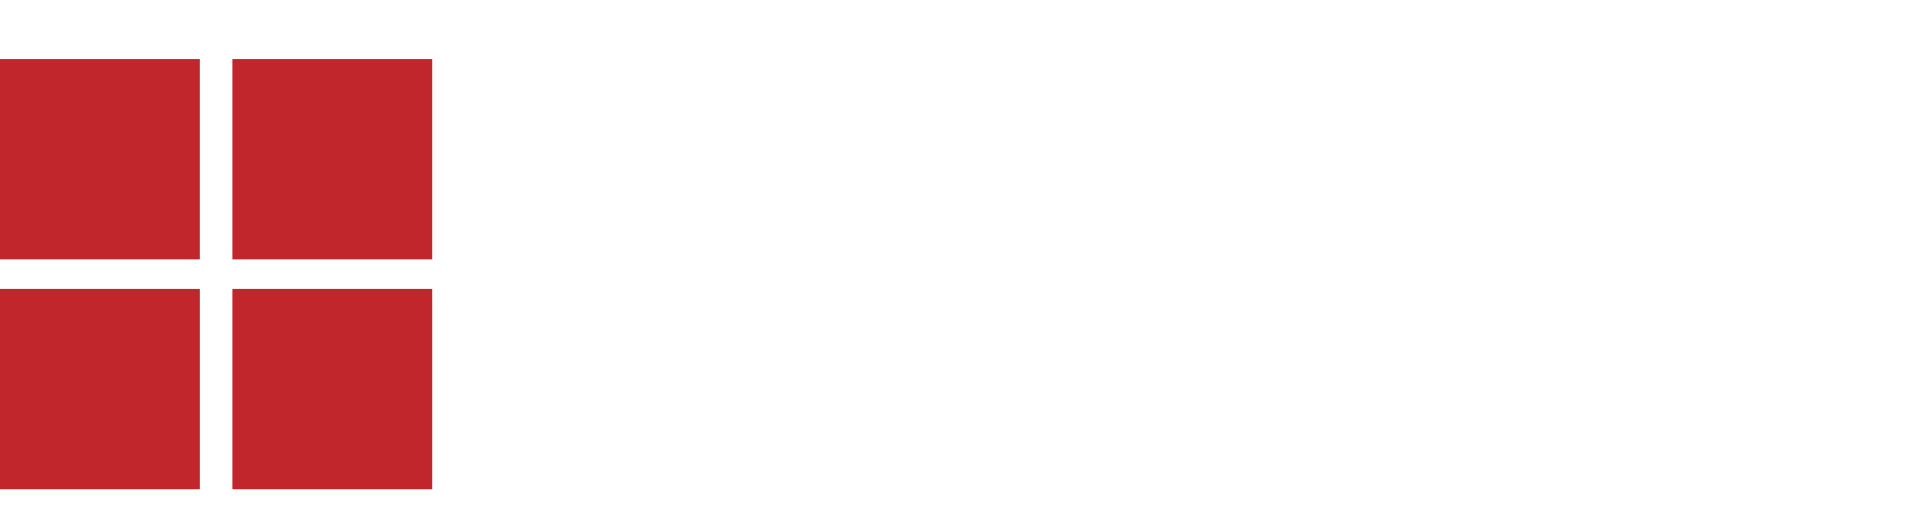 Event Engineering Hire